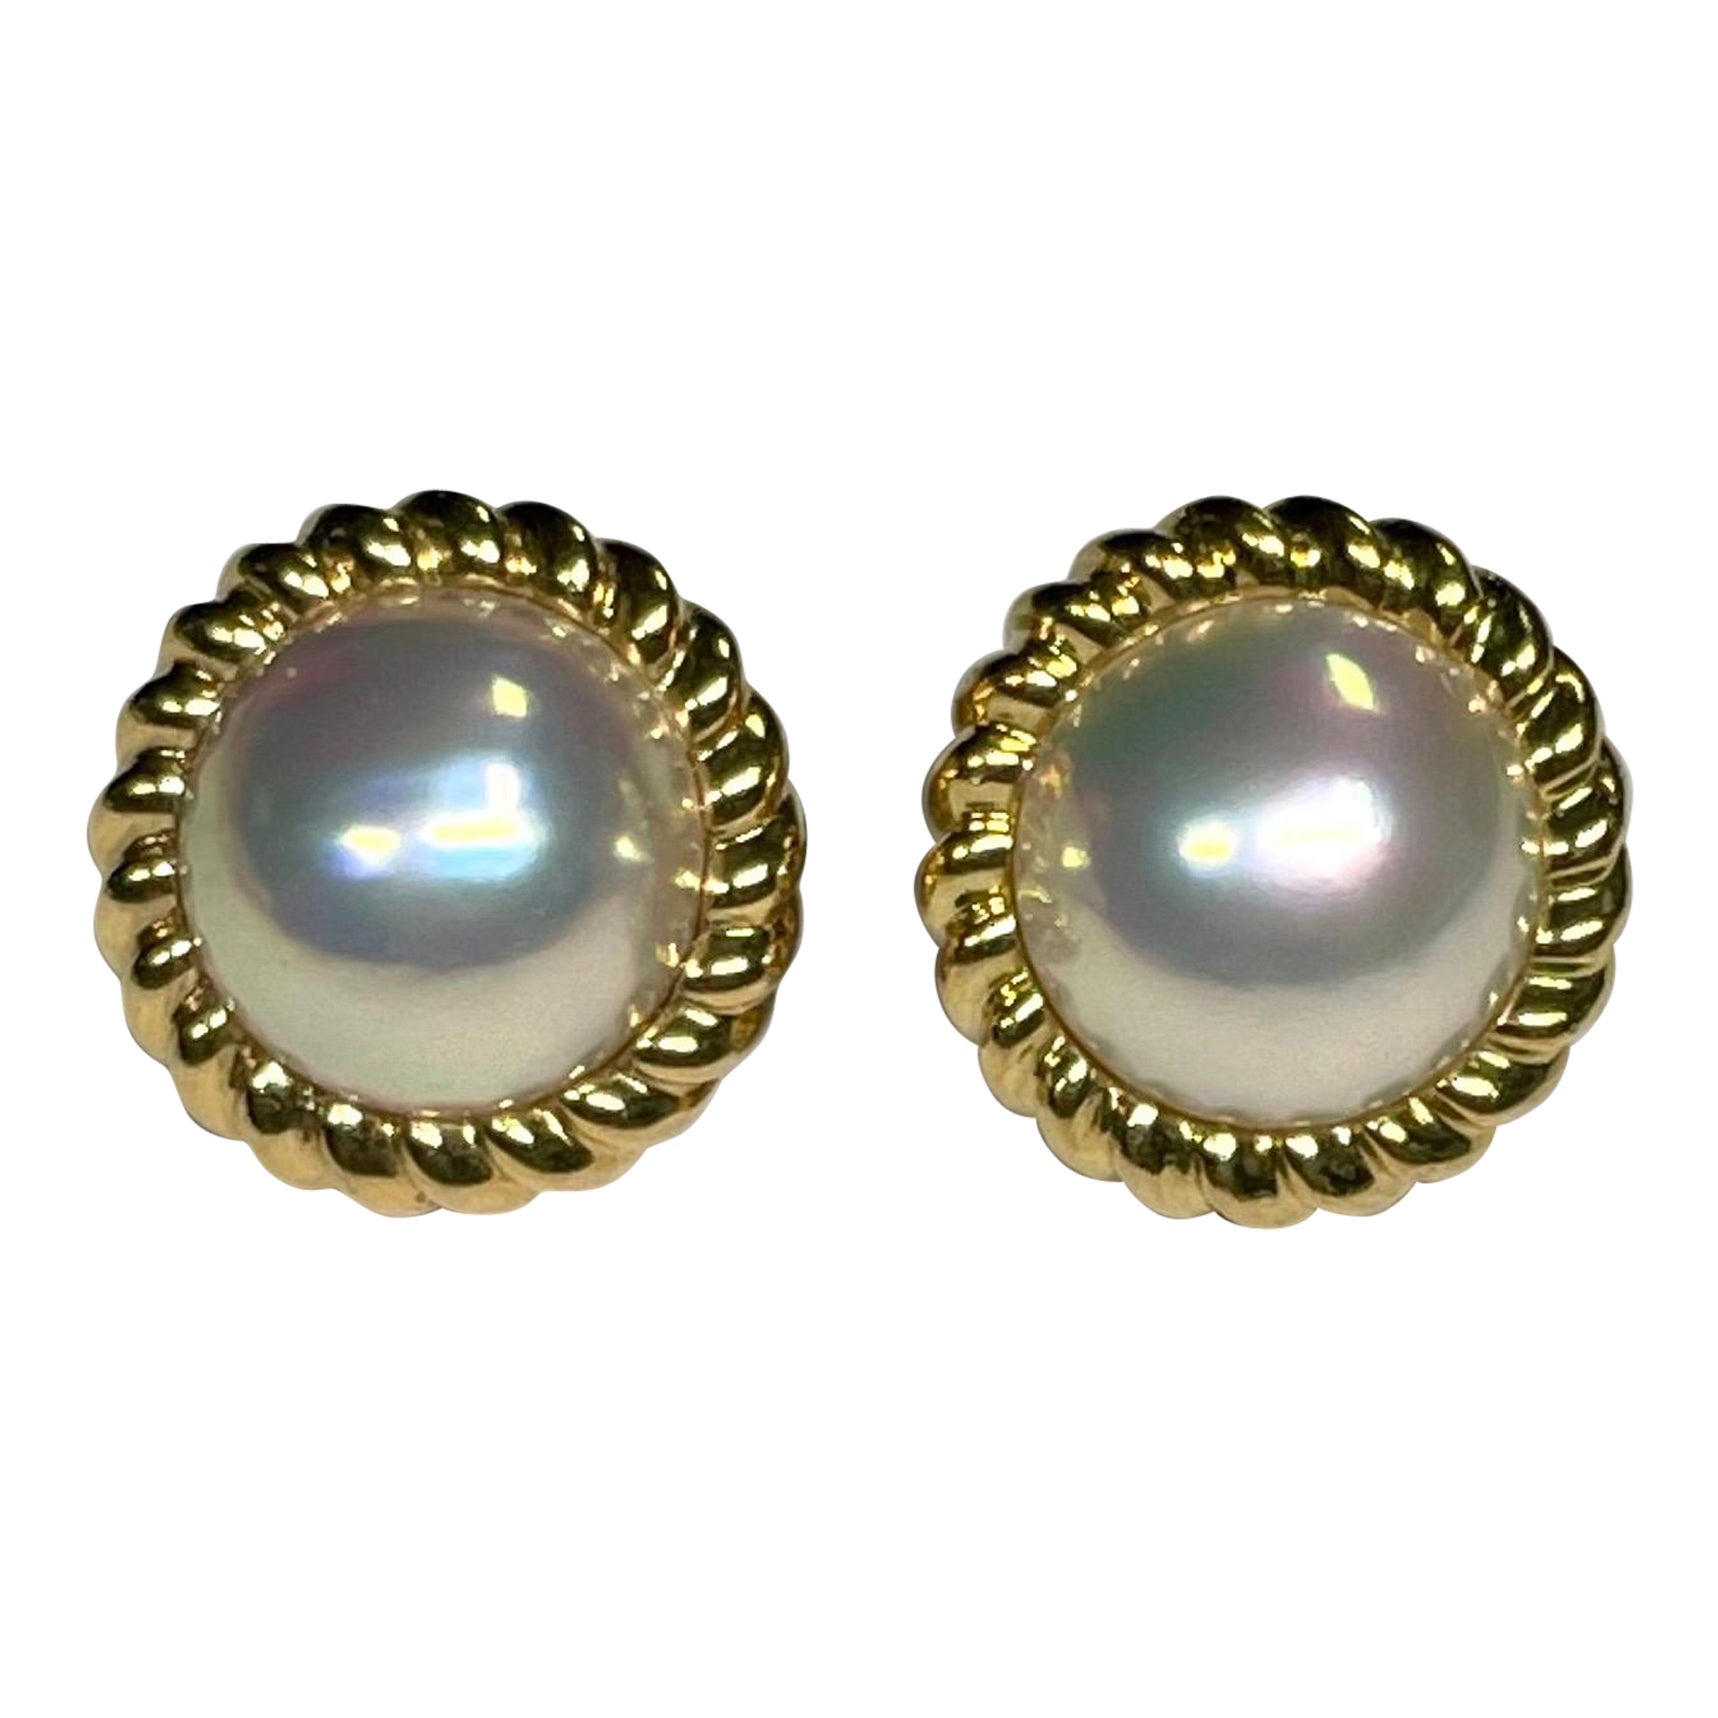 Tiffany & Co Mabe Pearl Earrings